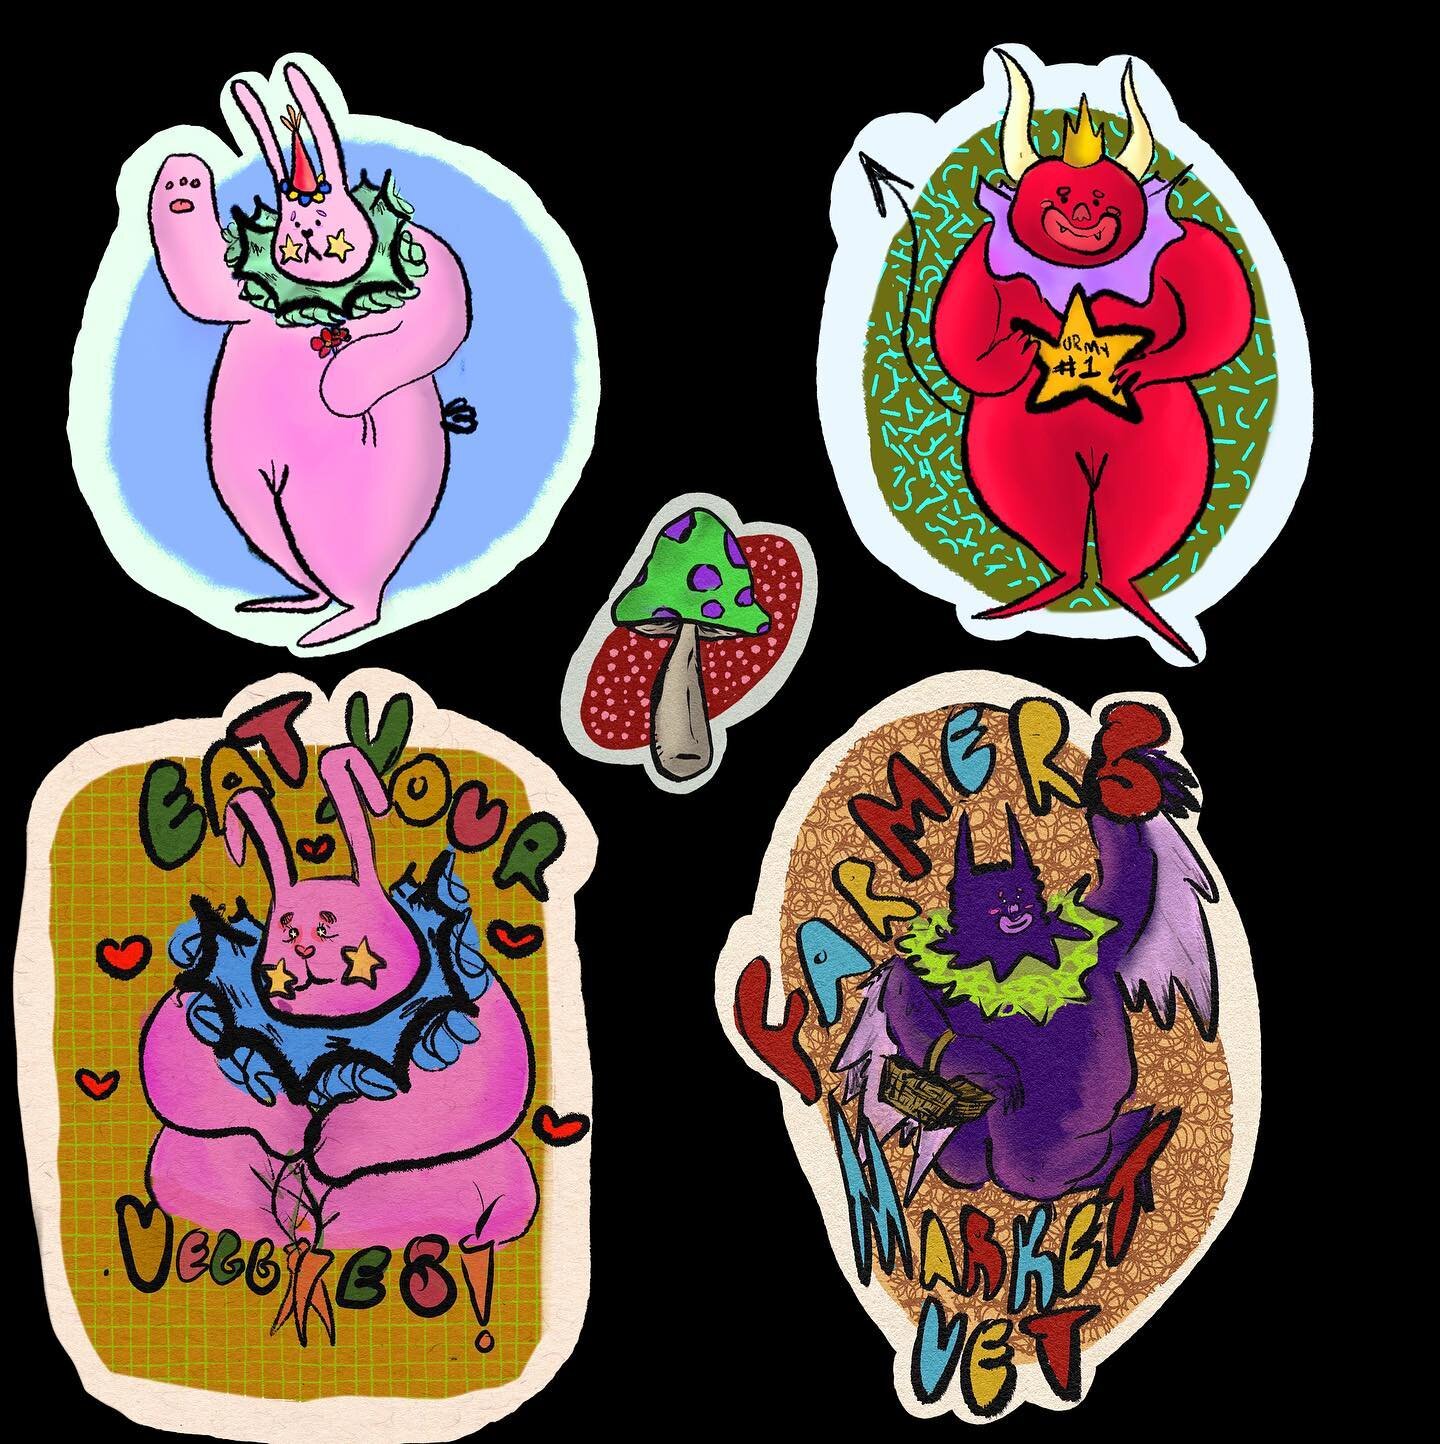 goblin stickers are hot off the press!! Dm to purchase 💕💕💕#goblin #goblincore #cute #stickers #sticker #illustration #illustrator #lgbt #transartist #goblintown